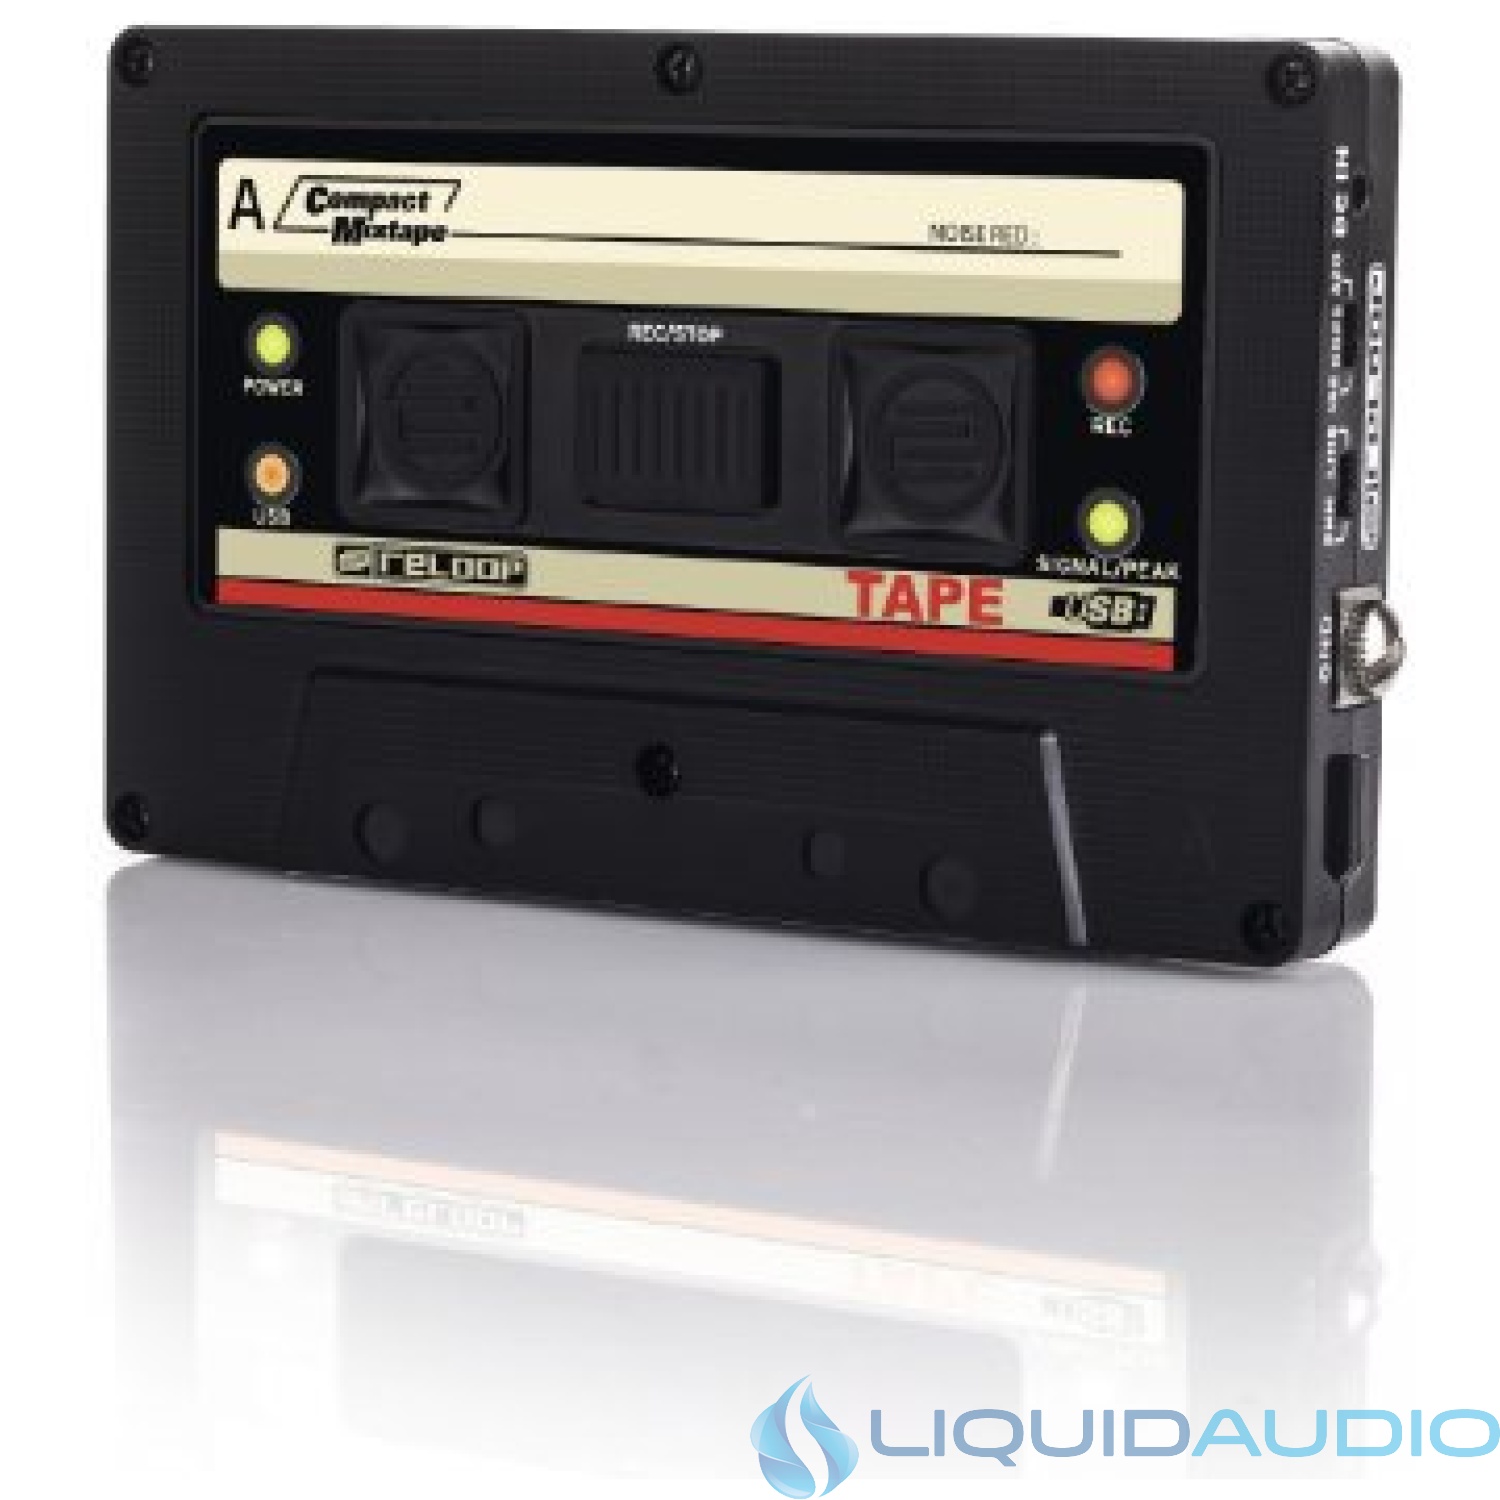 Reloop USB Mixtape Recorder with Retro Cassette Look, Black (TAPE)